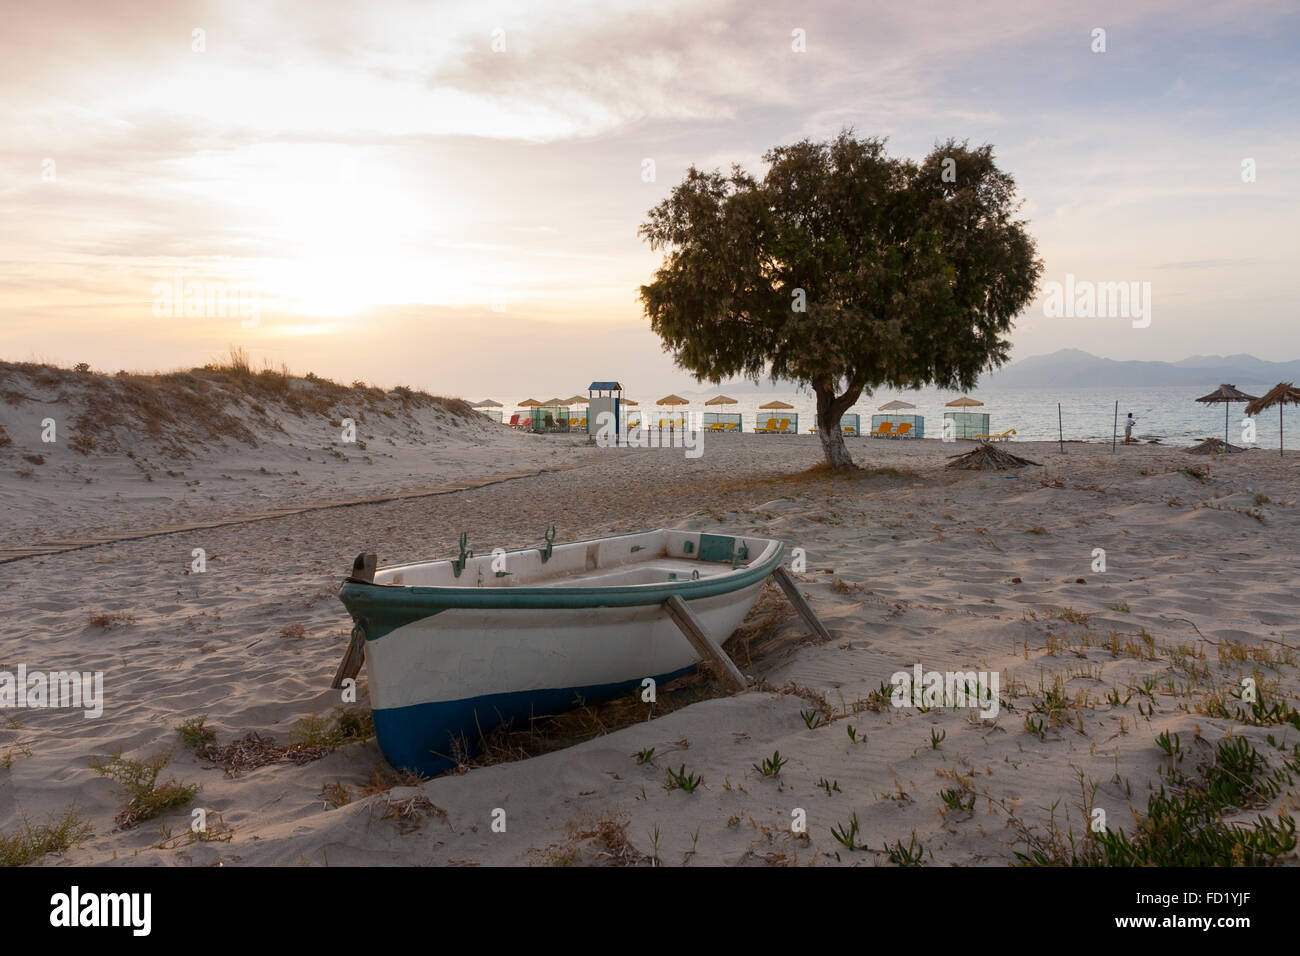 foreground row boat and dominant tree on beach at Marmari, Kos, Greece Stock Photo